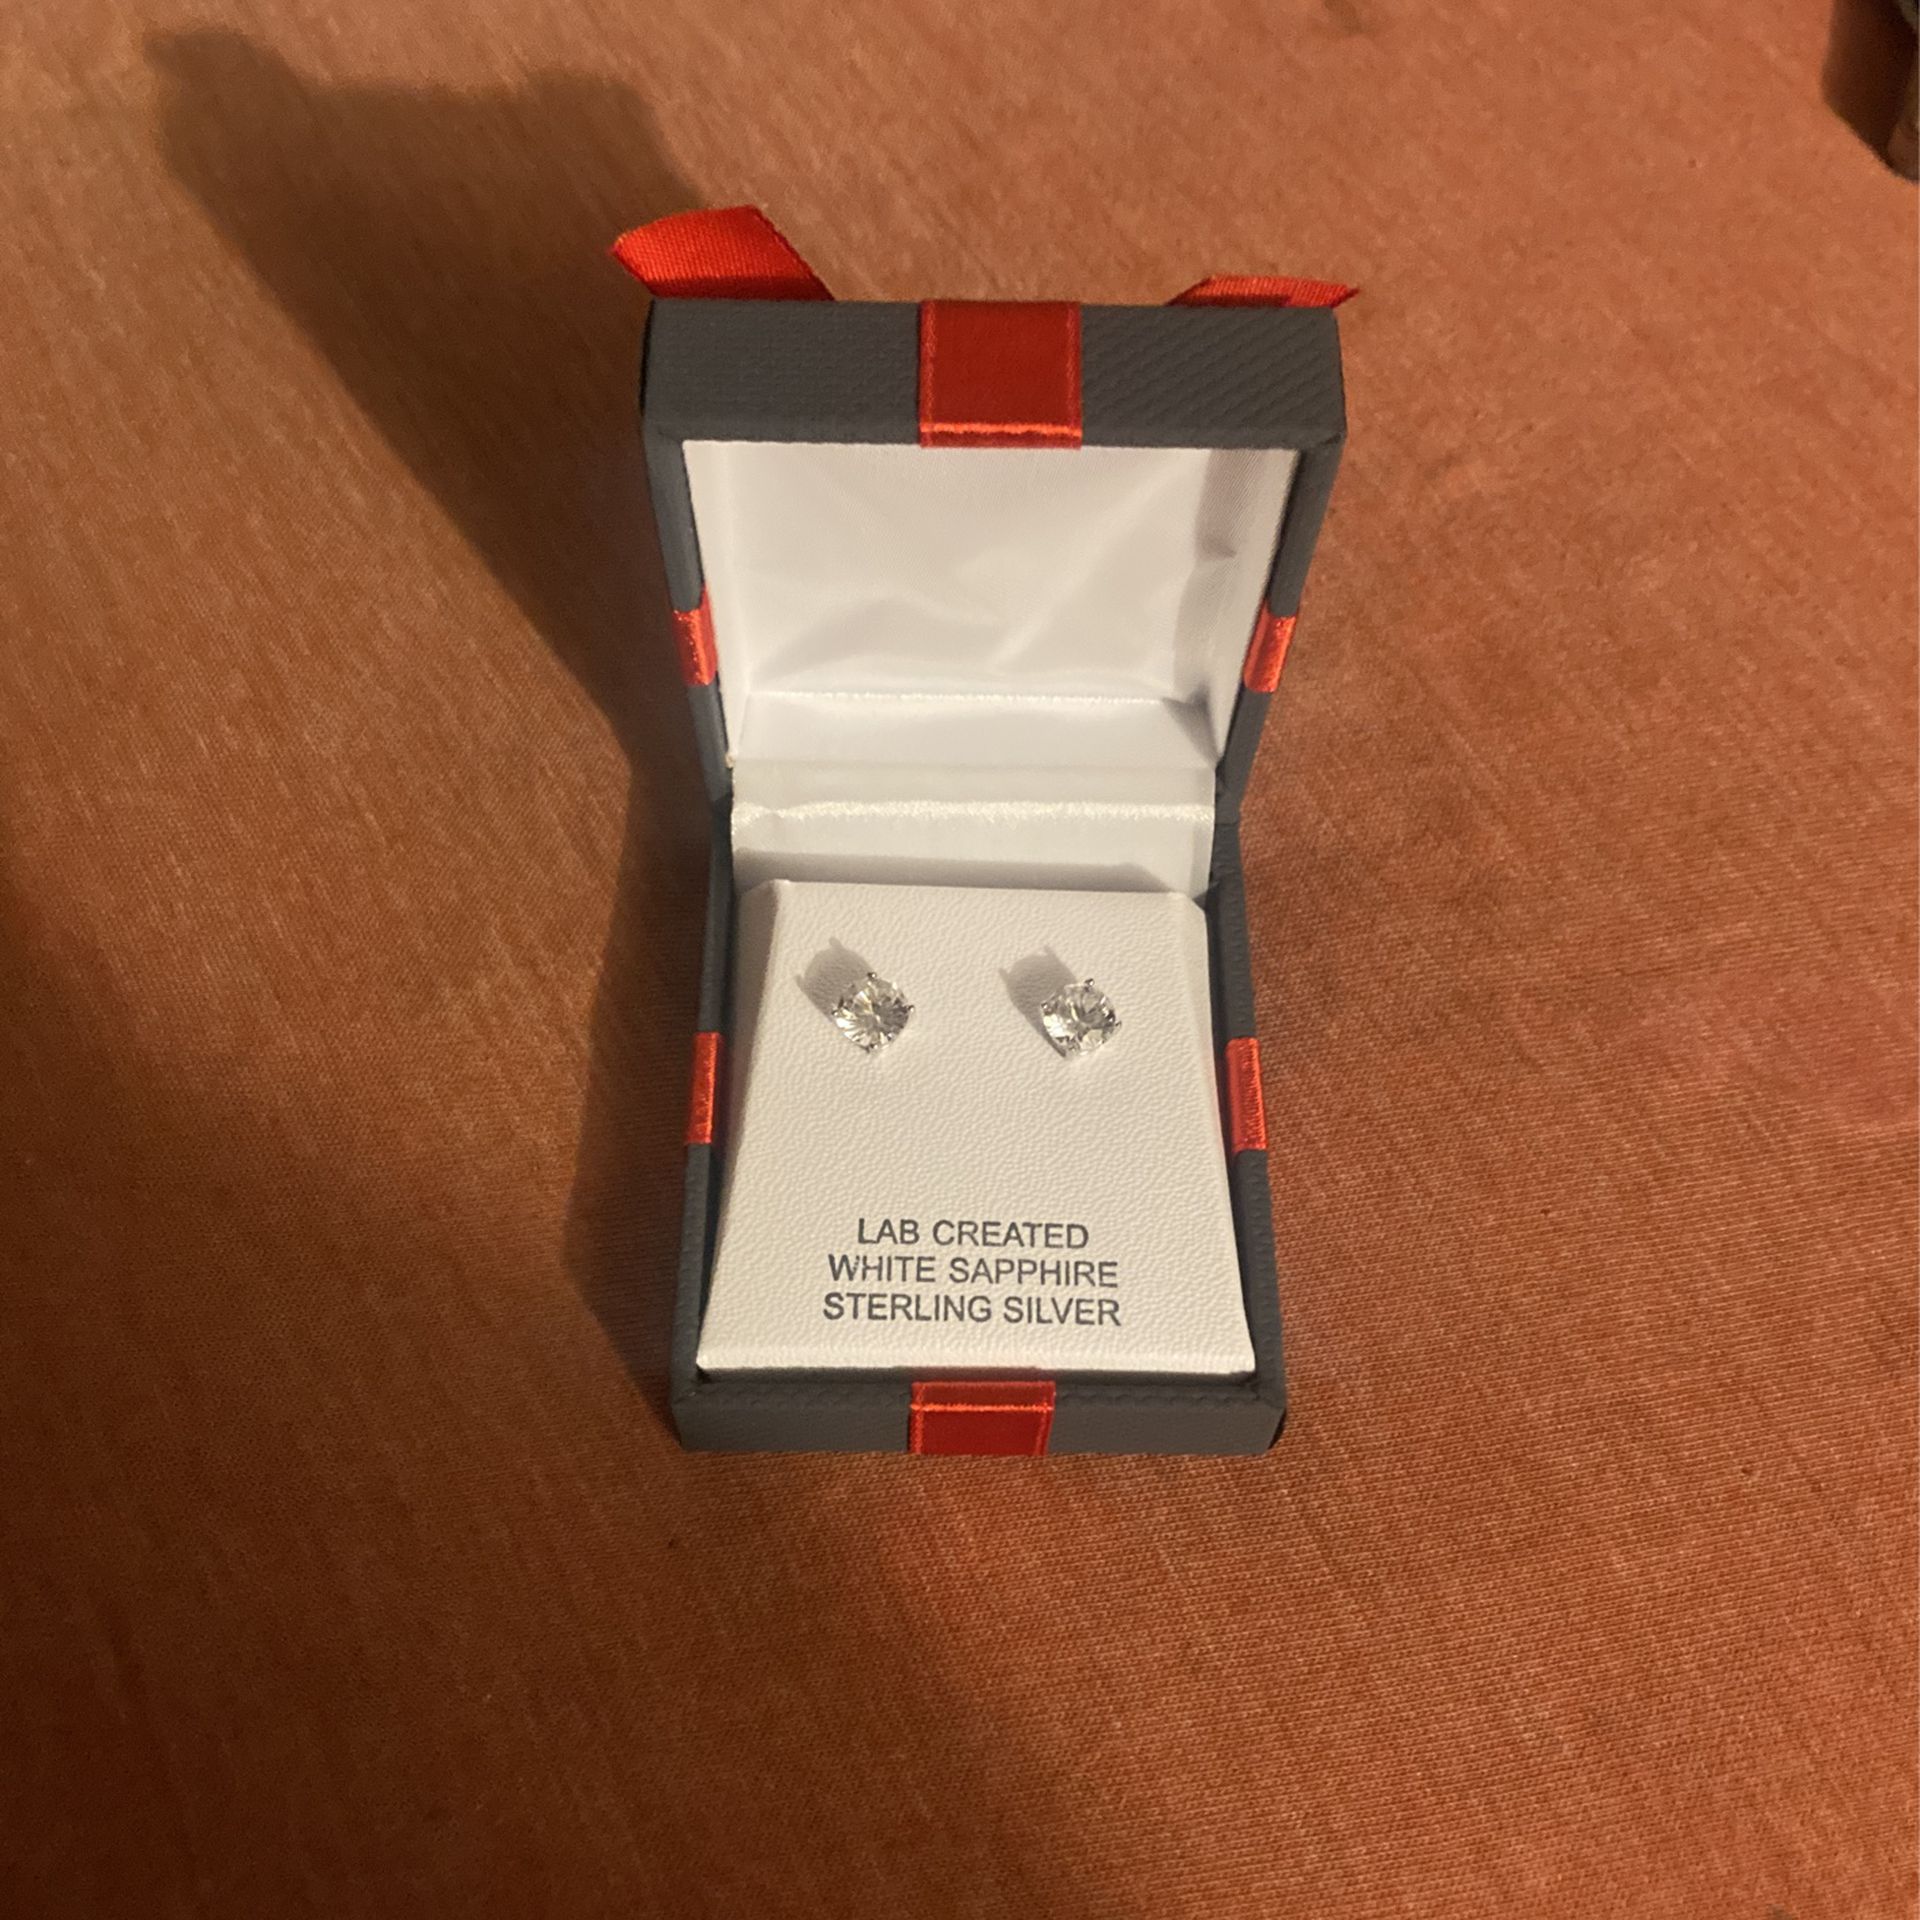 L C White Sapphire Sterling Silver Earrings $45 